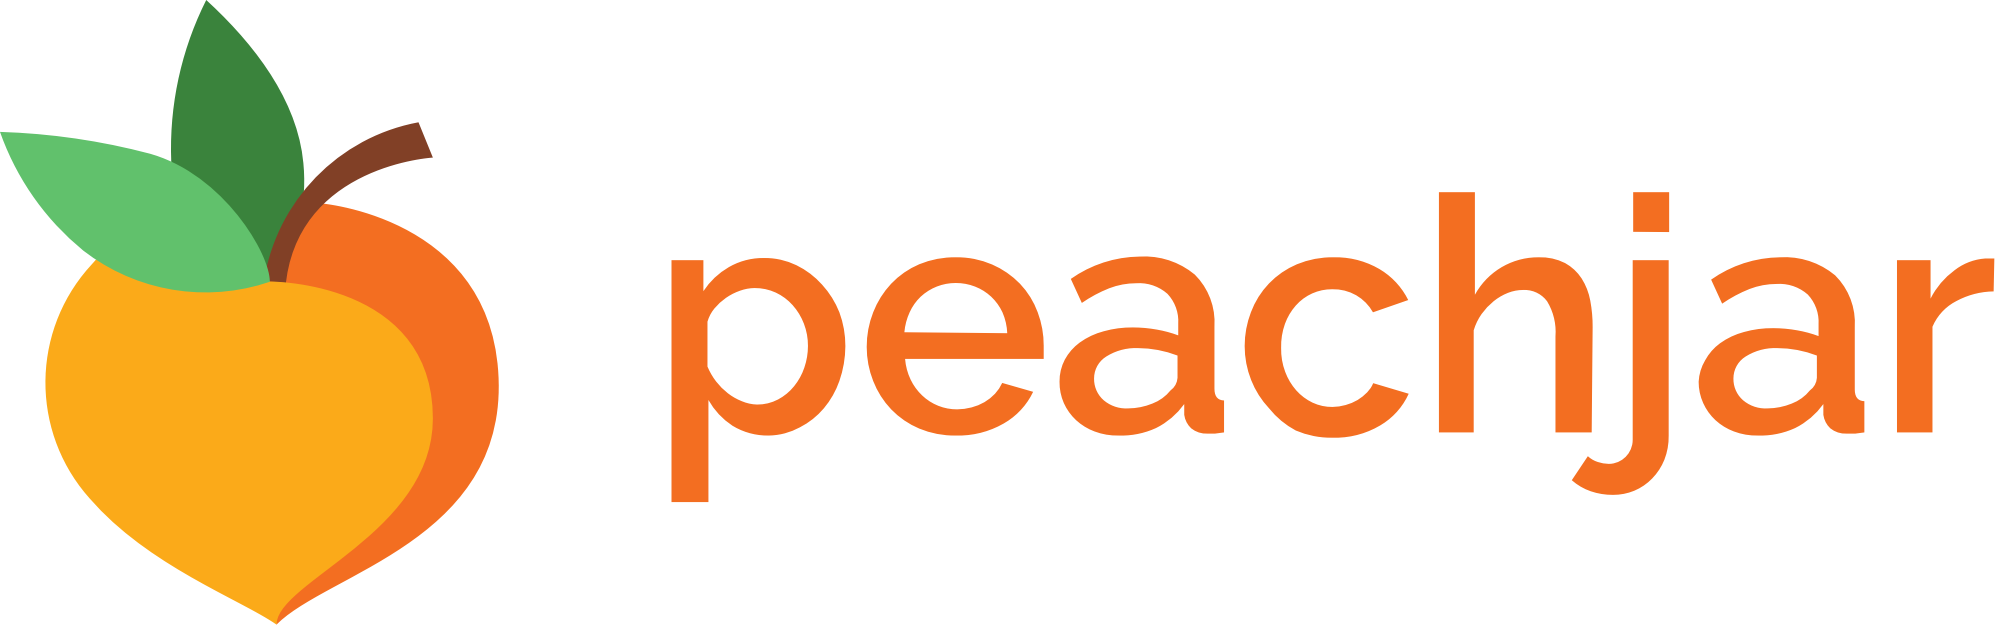 Peachjar Logo